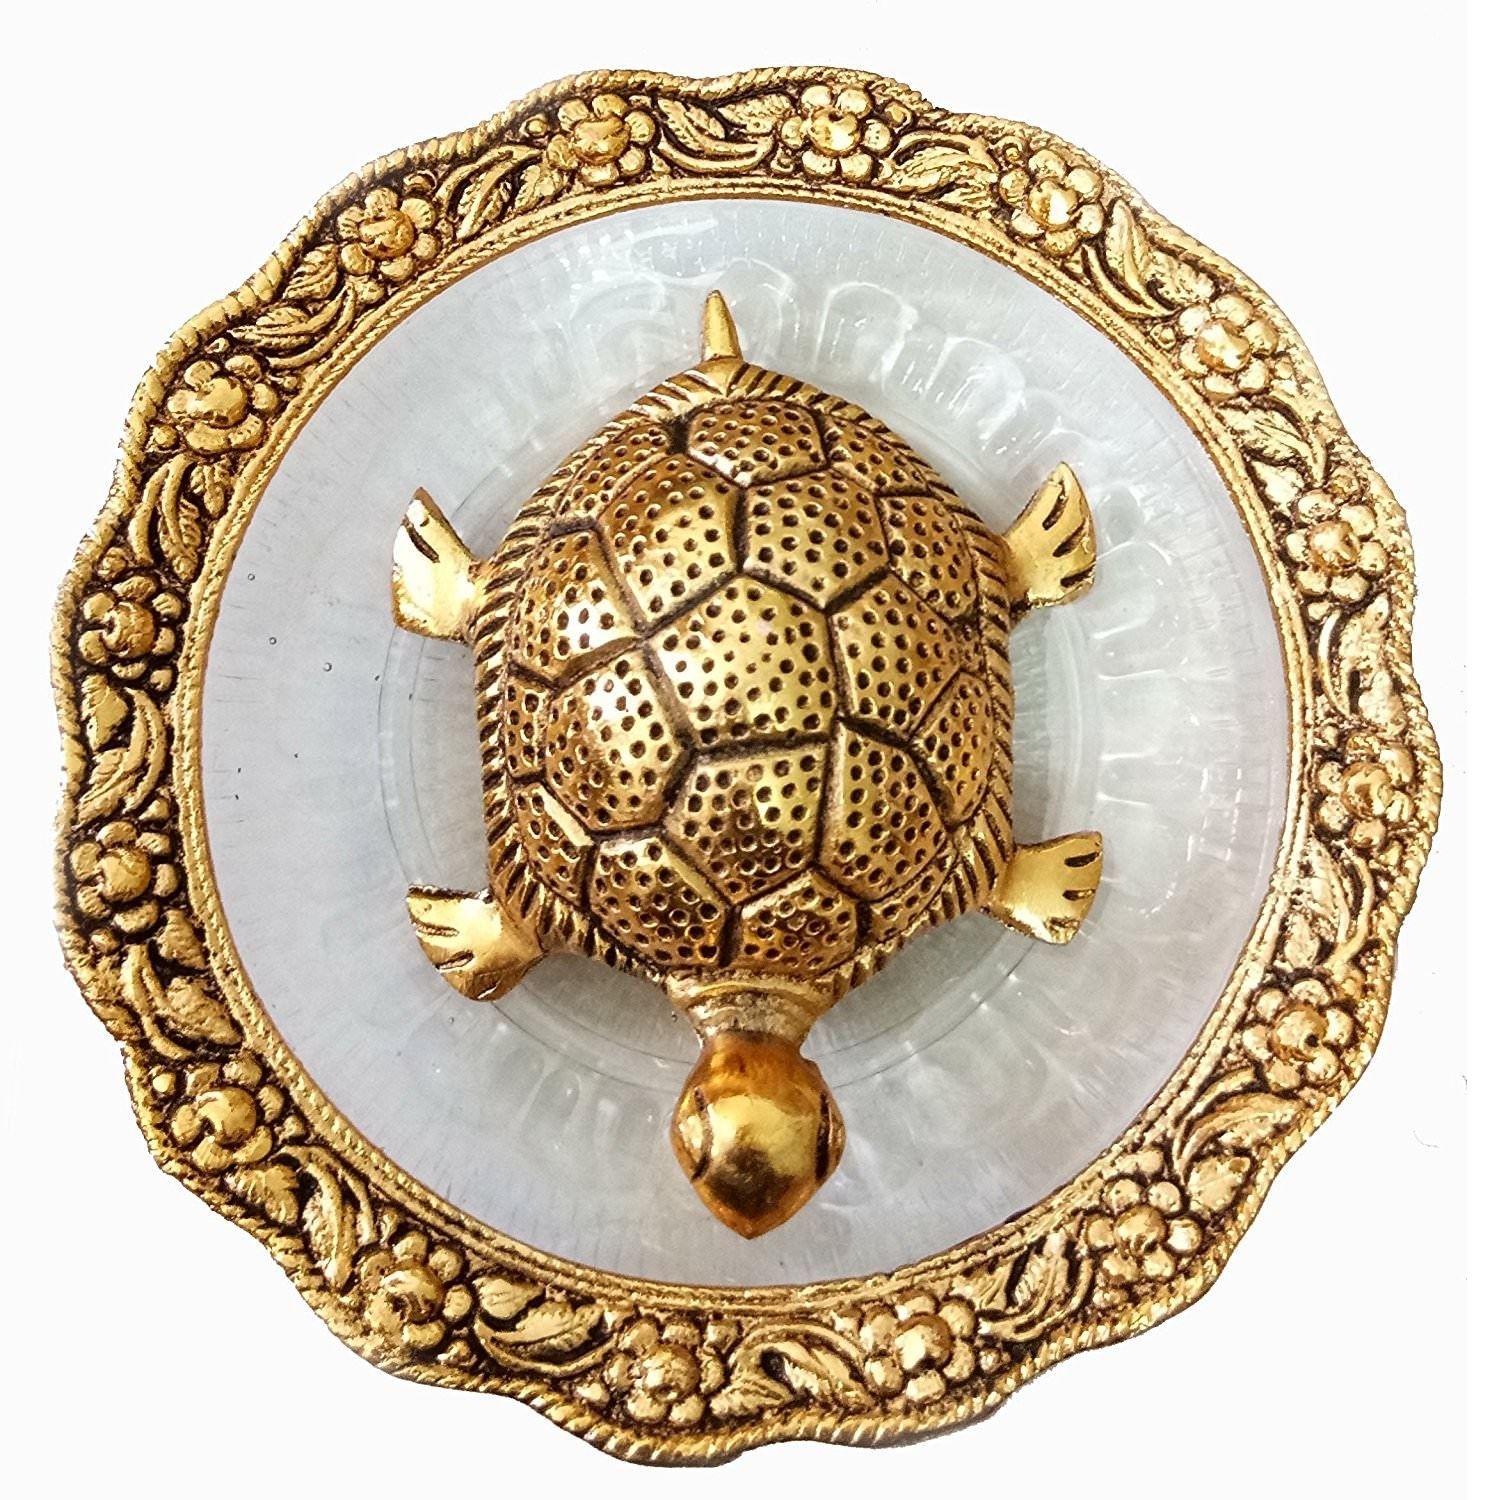 Trendy Crafts Metal Feng Shui Tortoise On Plate Showpiece